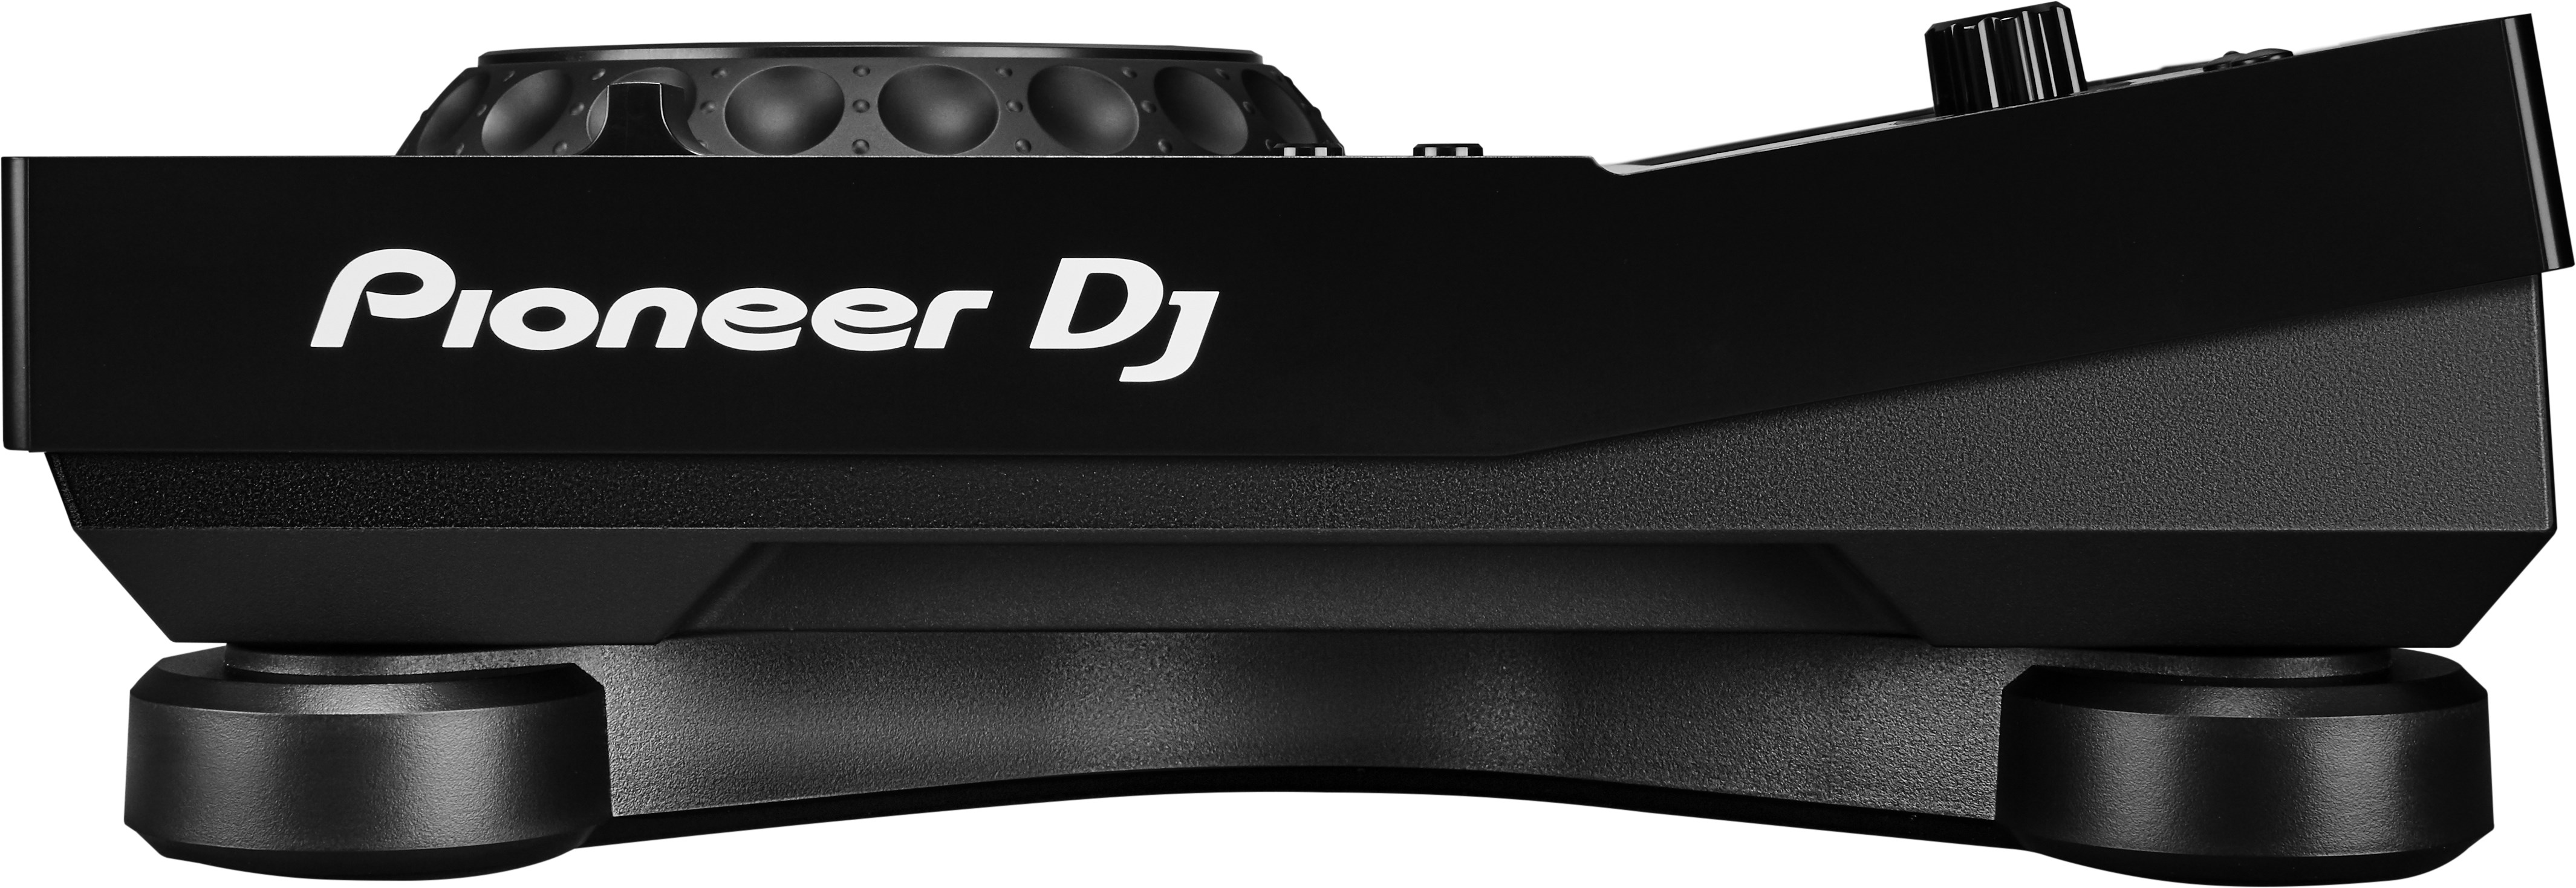 Pioneer XDJ-700 - Compact TableTop Media Player For Rekordbox